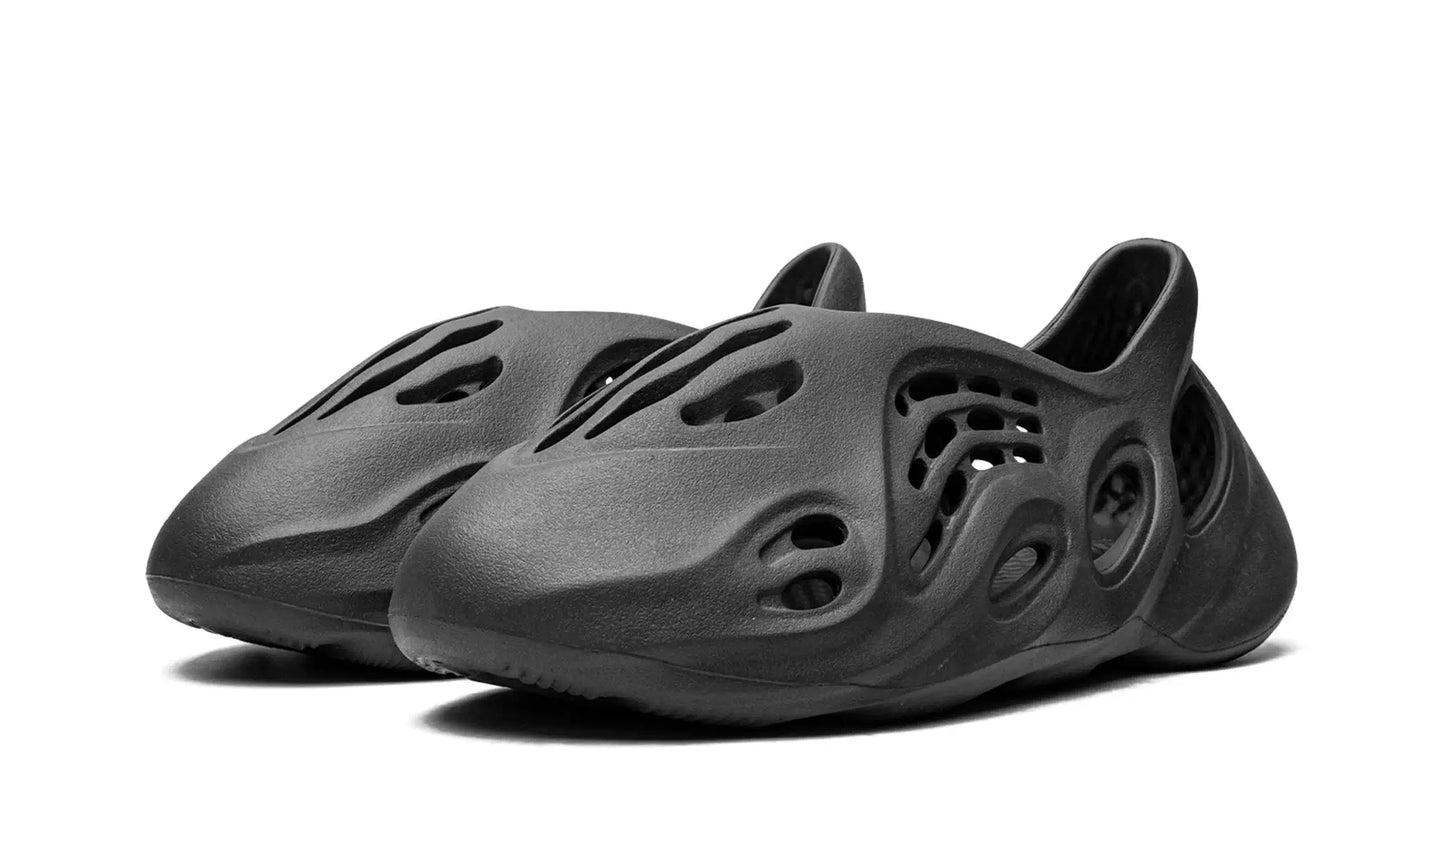 Tênis Adidas Yeezy Foam Runner "Onyx"